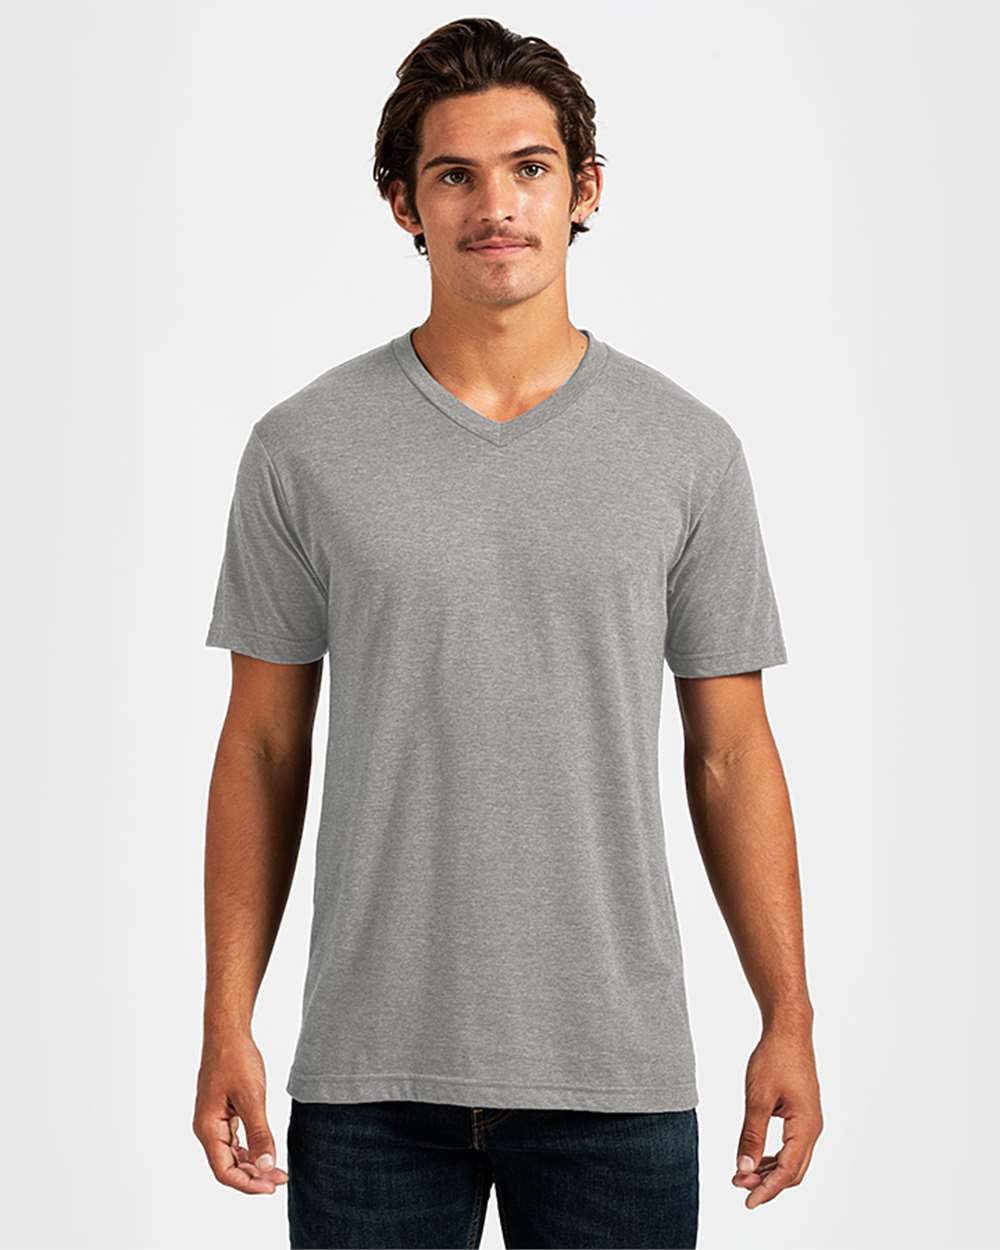 Tultex 207 - Unisex Poly-Rich V-Neck T-Shirt